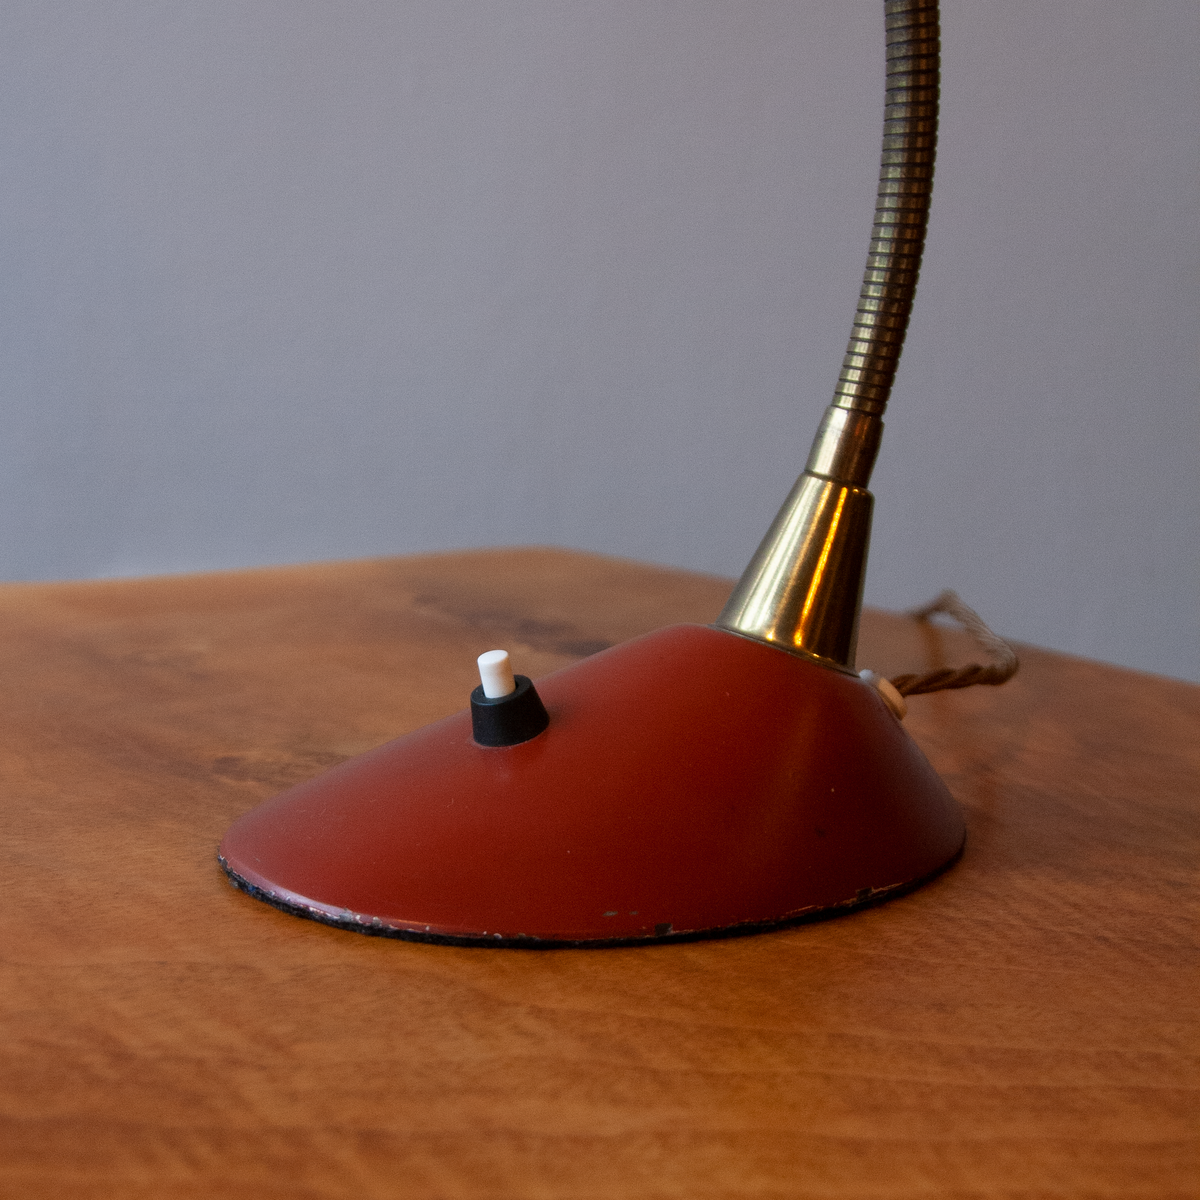 Cobra Table Lamp / Cosack Leuchten, Germany, 1950s